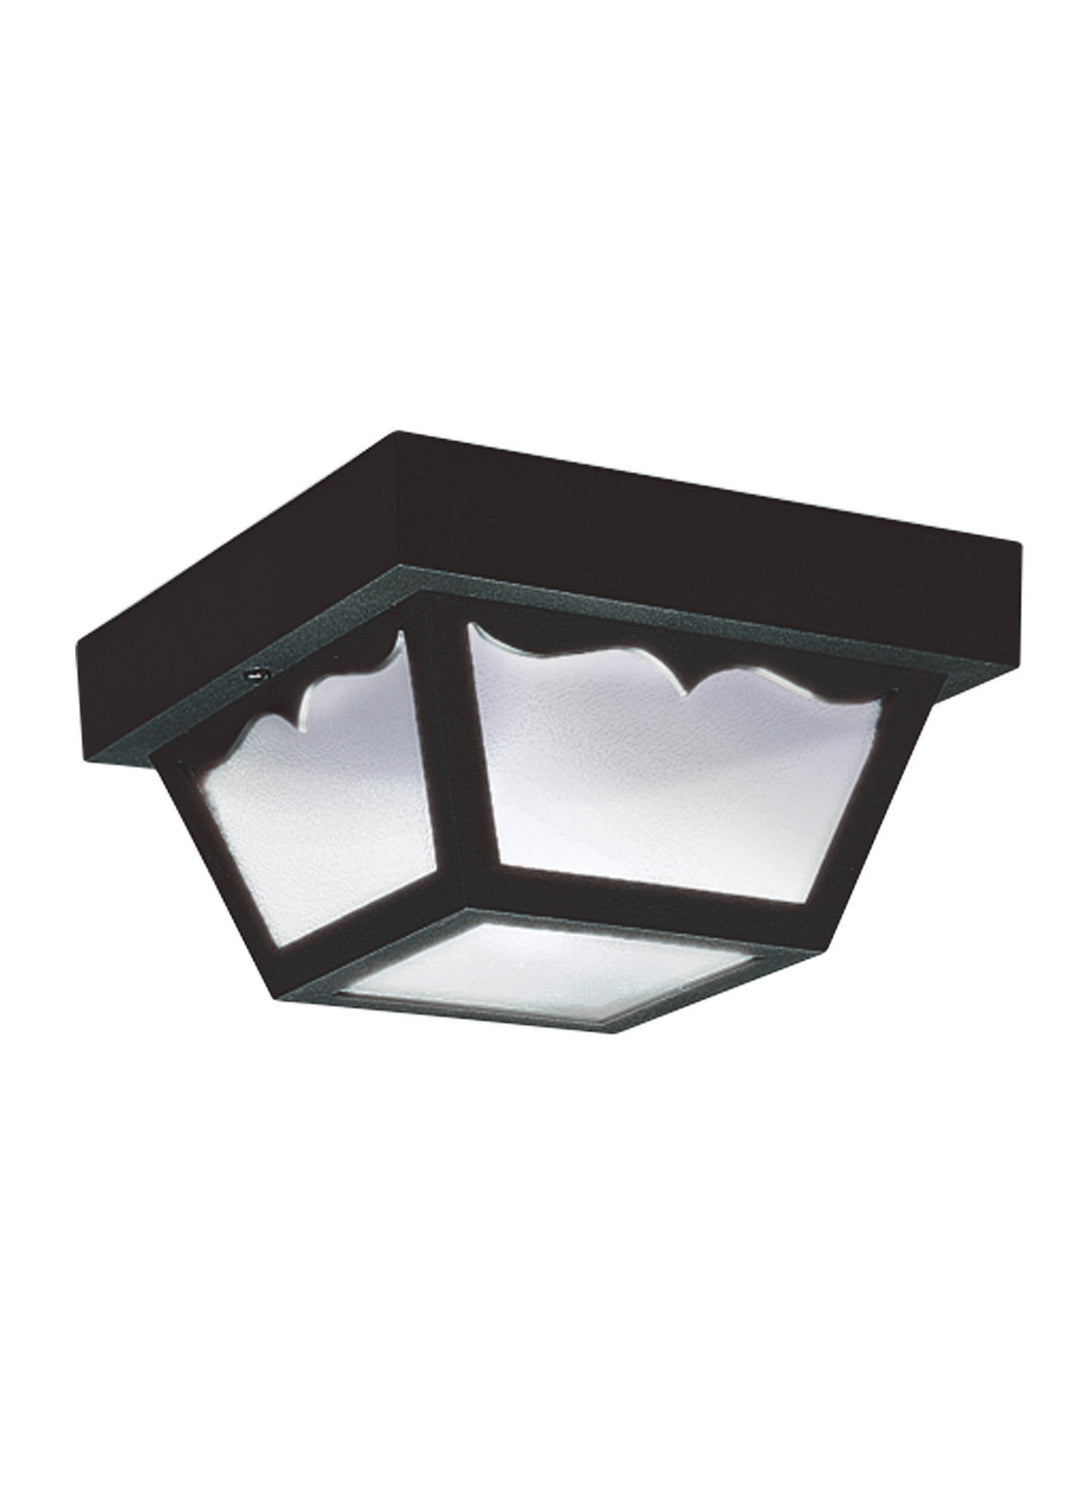 Generation Lighting Canada. - One Light Outdoor Flush Mount - Outdoor Ceiling - Black- Union Lighting Luminaires Decor